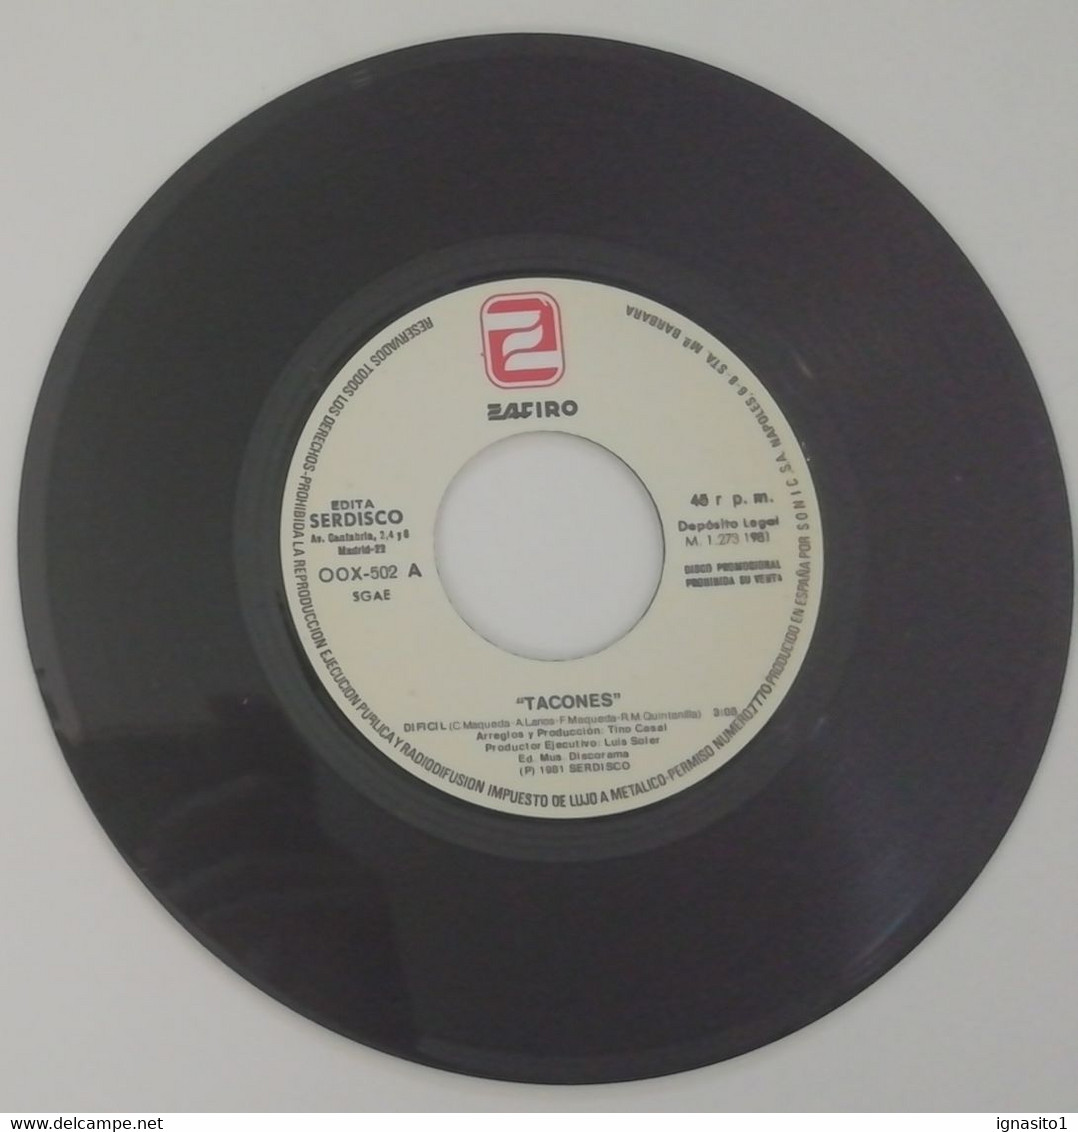 TACONES - Dificil / Rita Se Hizo De Oro - Disco Promocional - Año 1981 - Sonstige - Spanische Musik